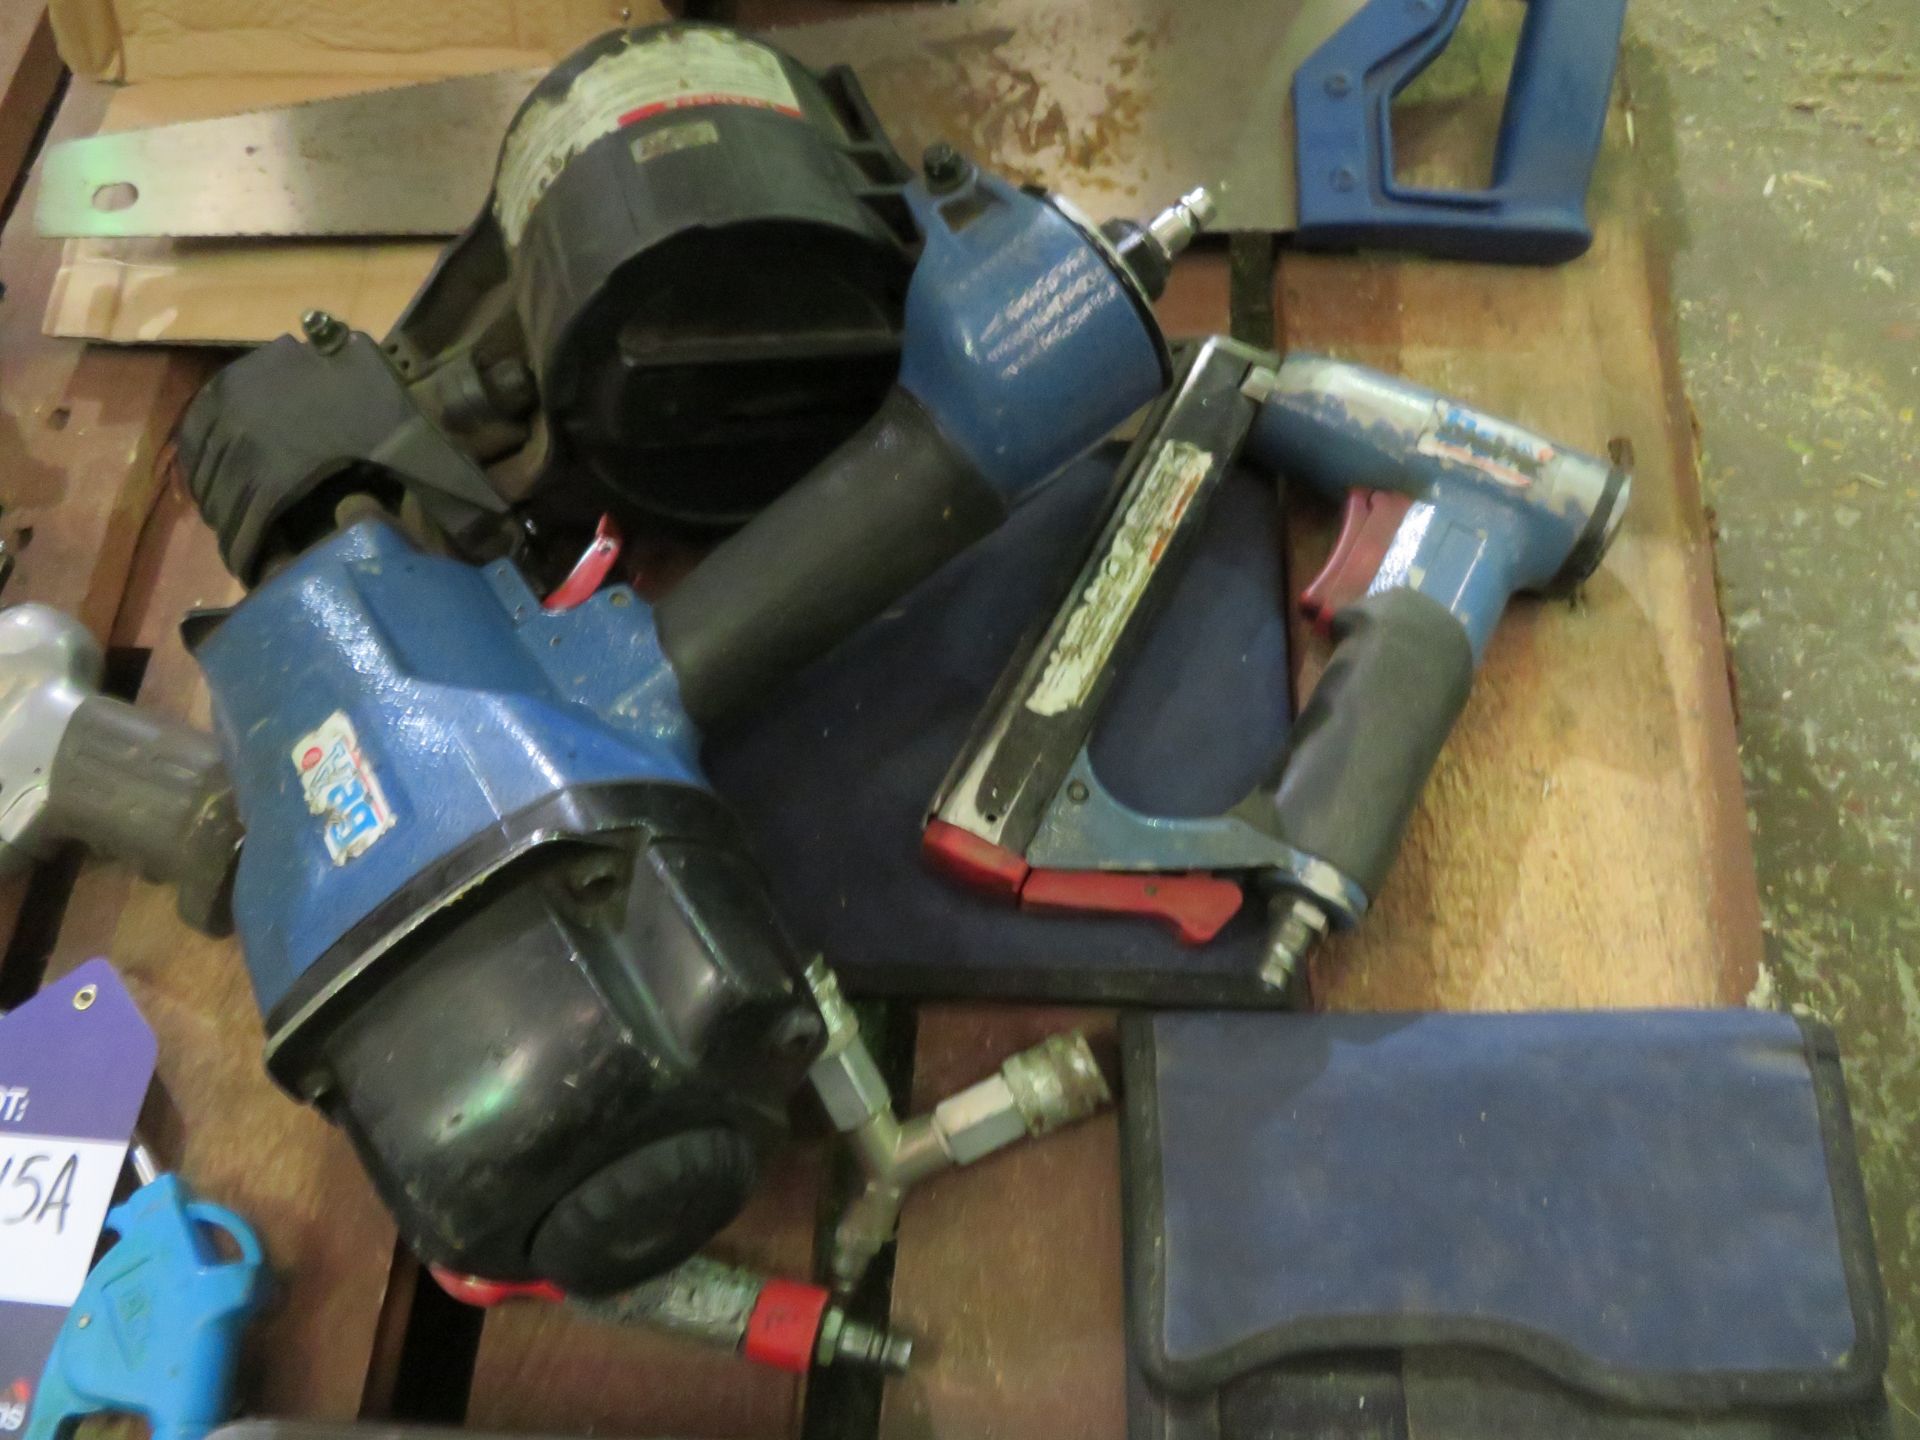 Pallet to contain 2 Pneumatic Staple Guns, Pneumatic Nail Gun, Pneumatic Drills etc - Image 3 of 4